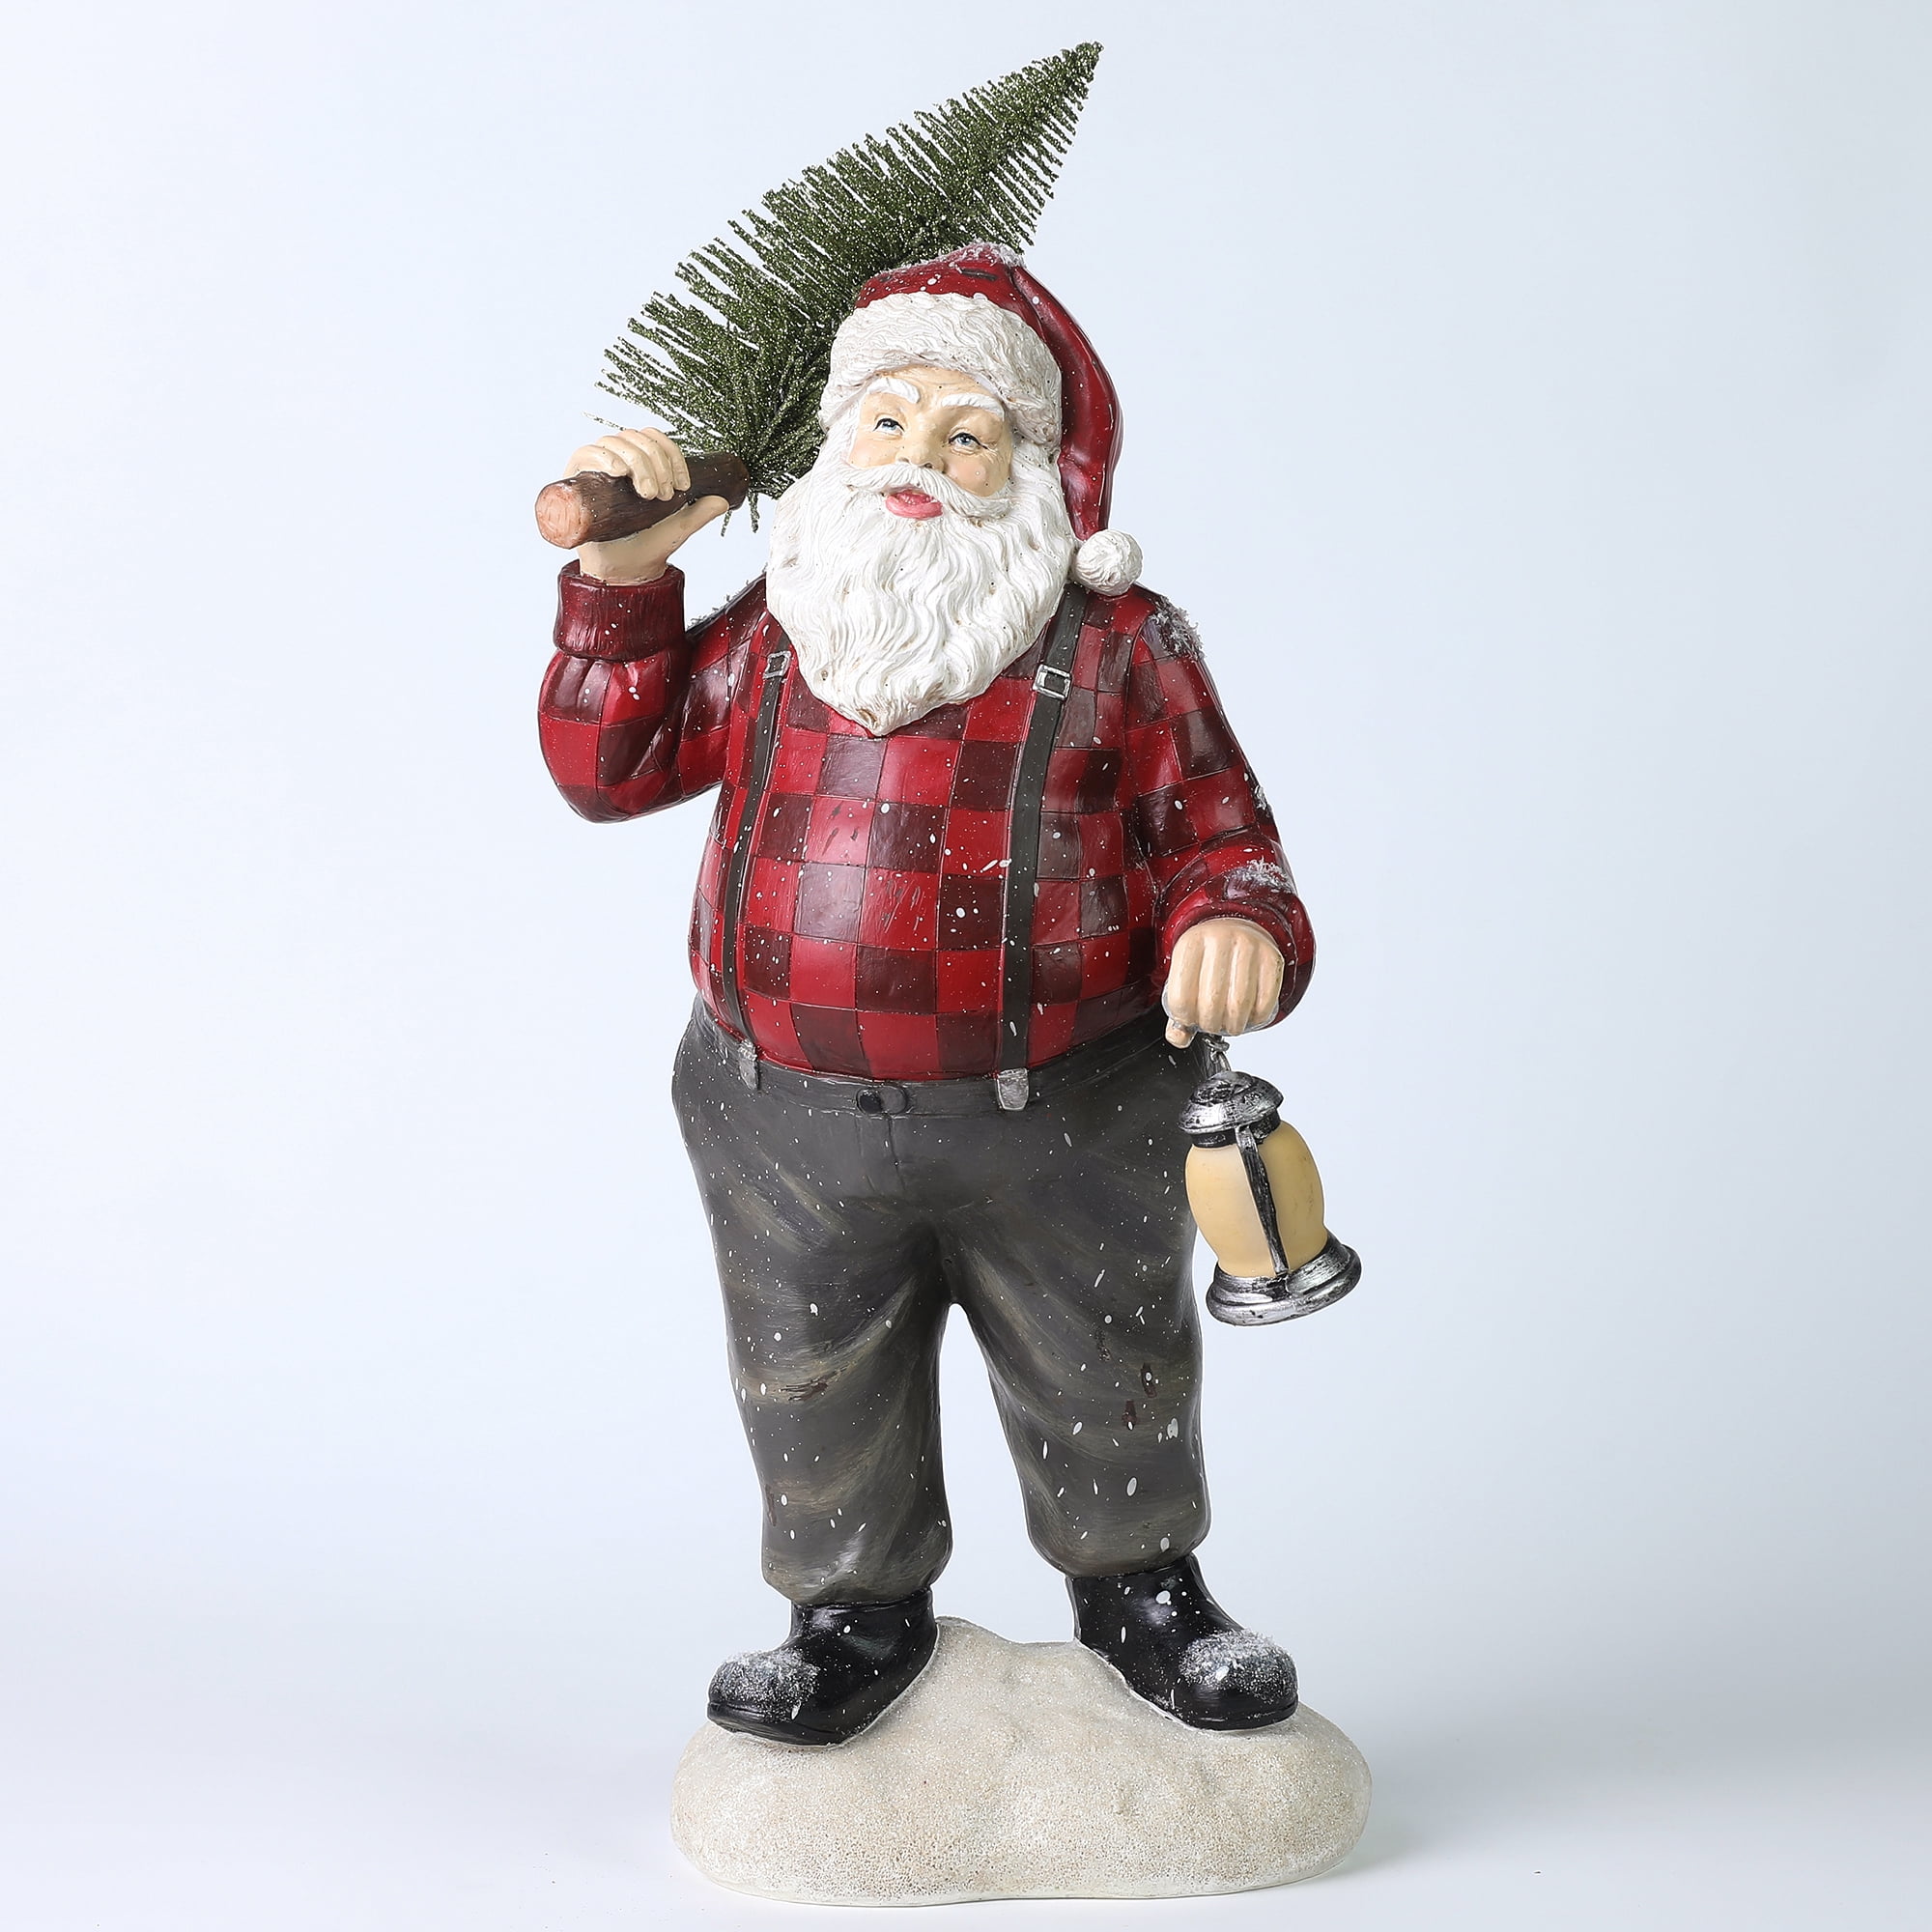 Flannel Santa Claus Figurine with LED Light - Walmart.com